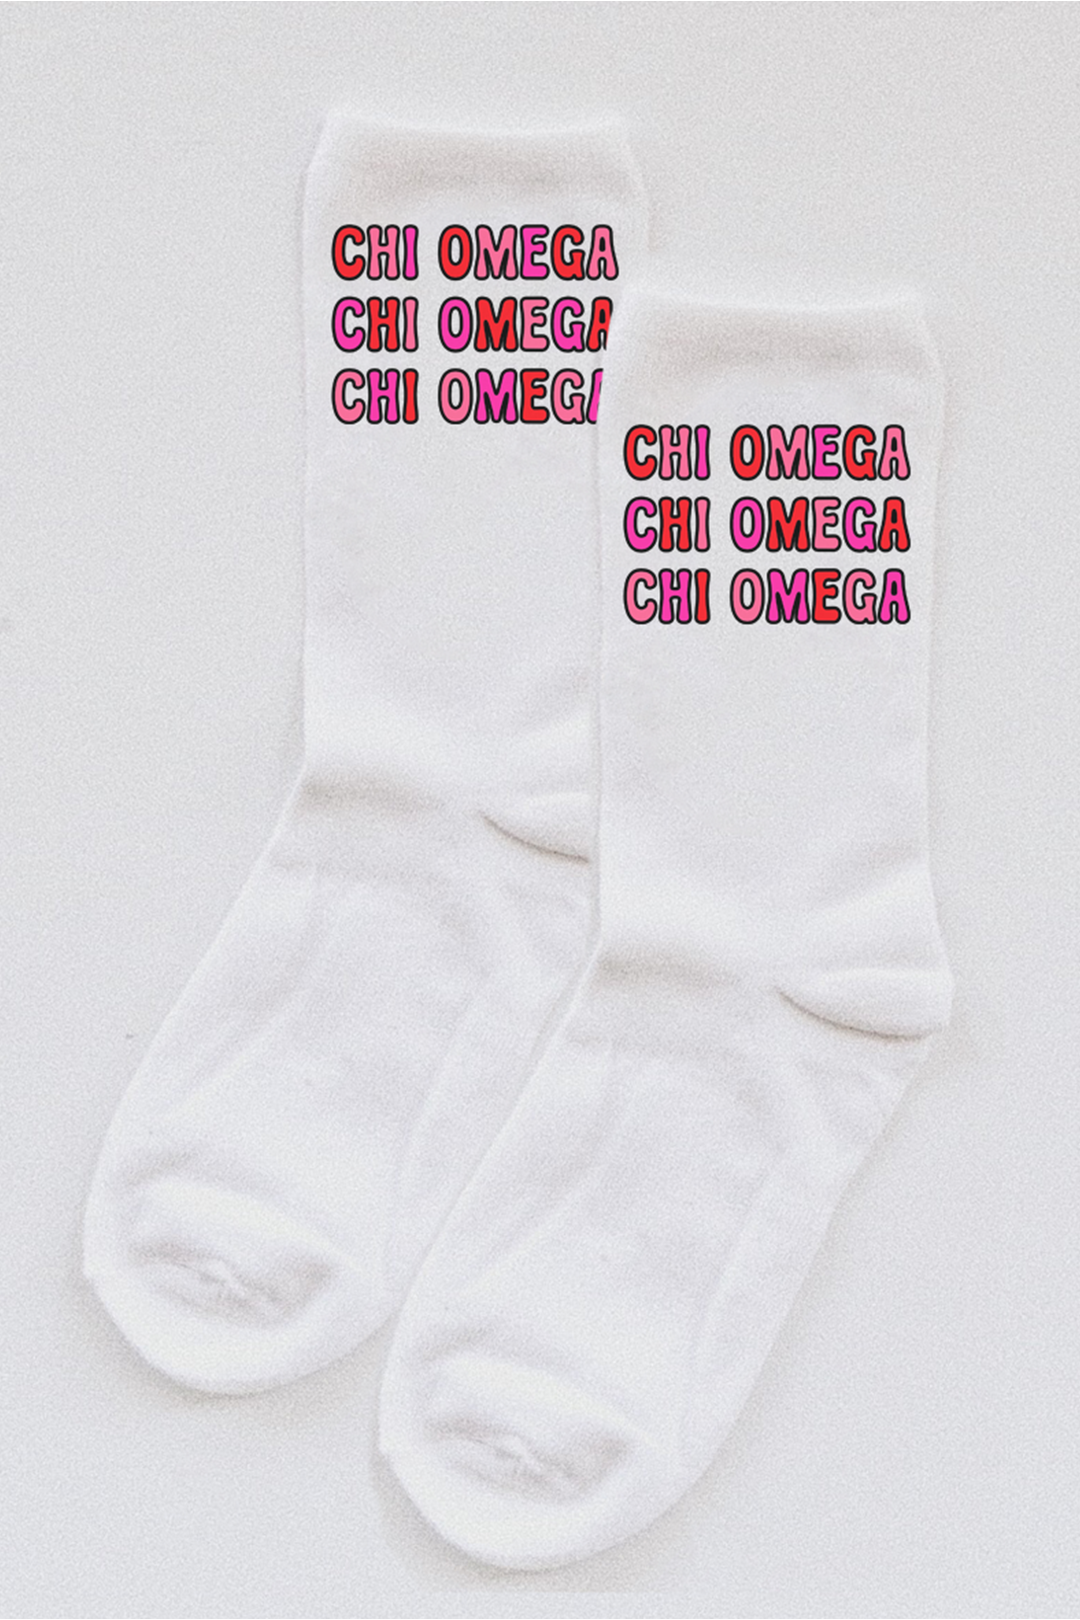 Pink Bubble Letter socks - Chi Omega